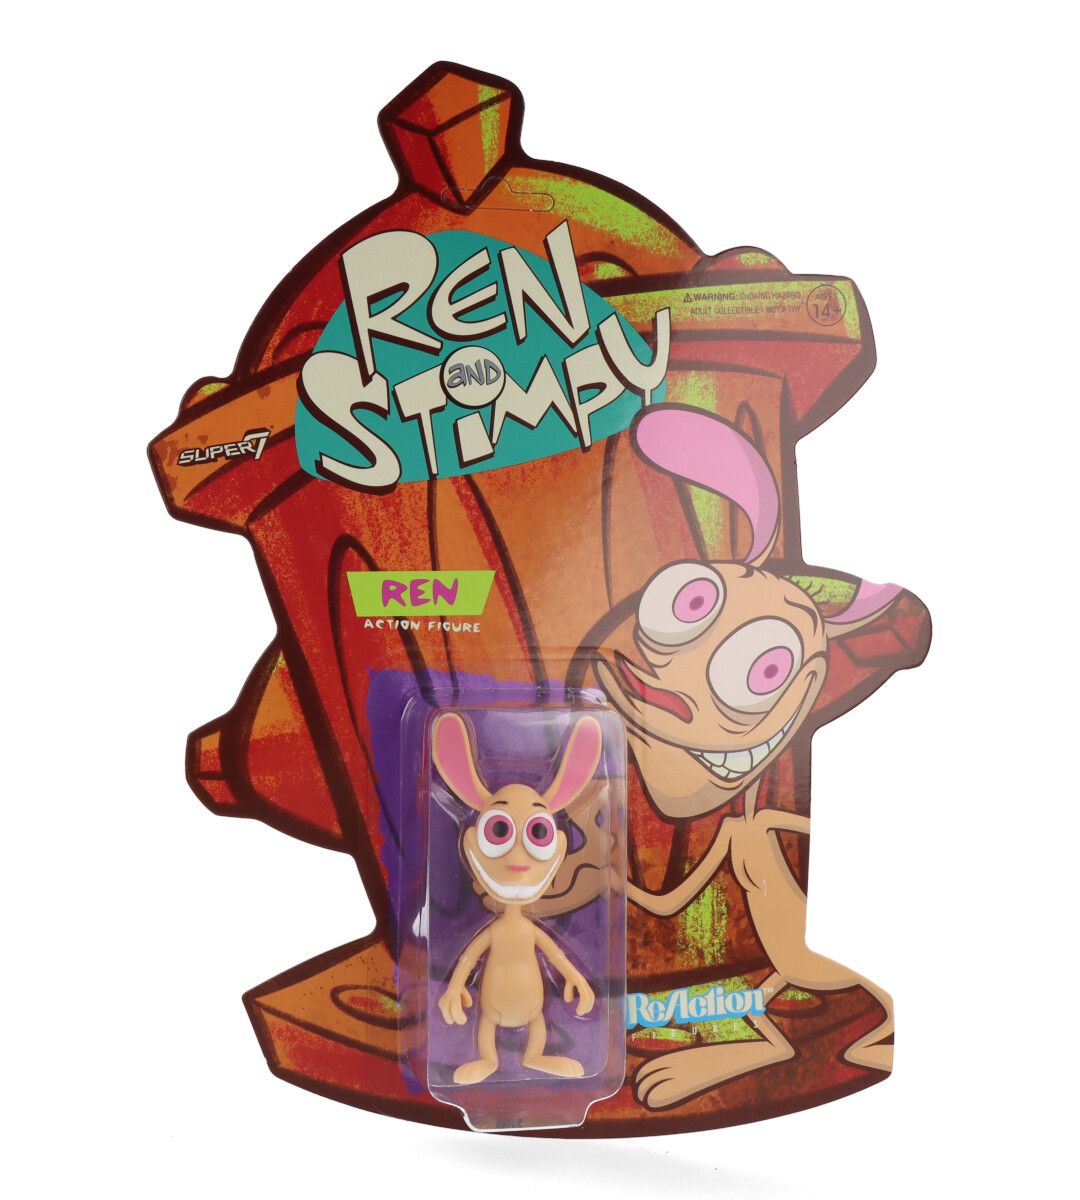 Ren (Ren & Stimpy) - ReAction figure